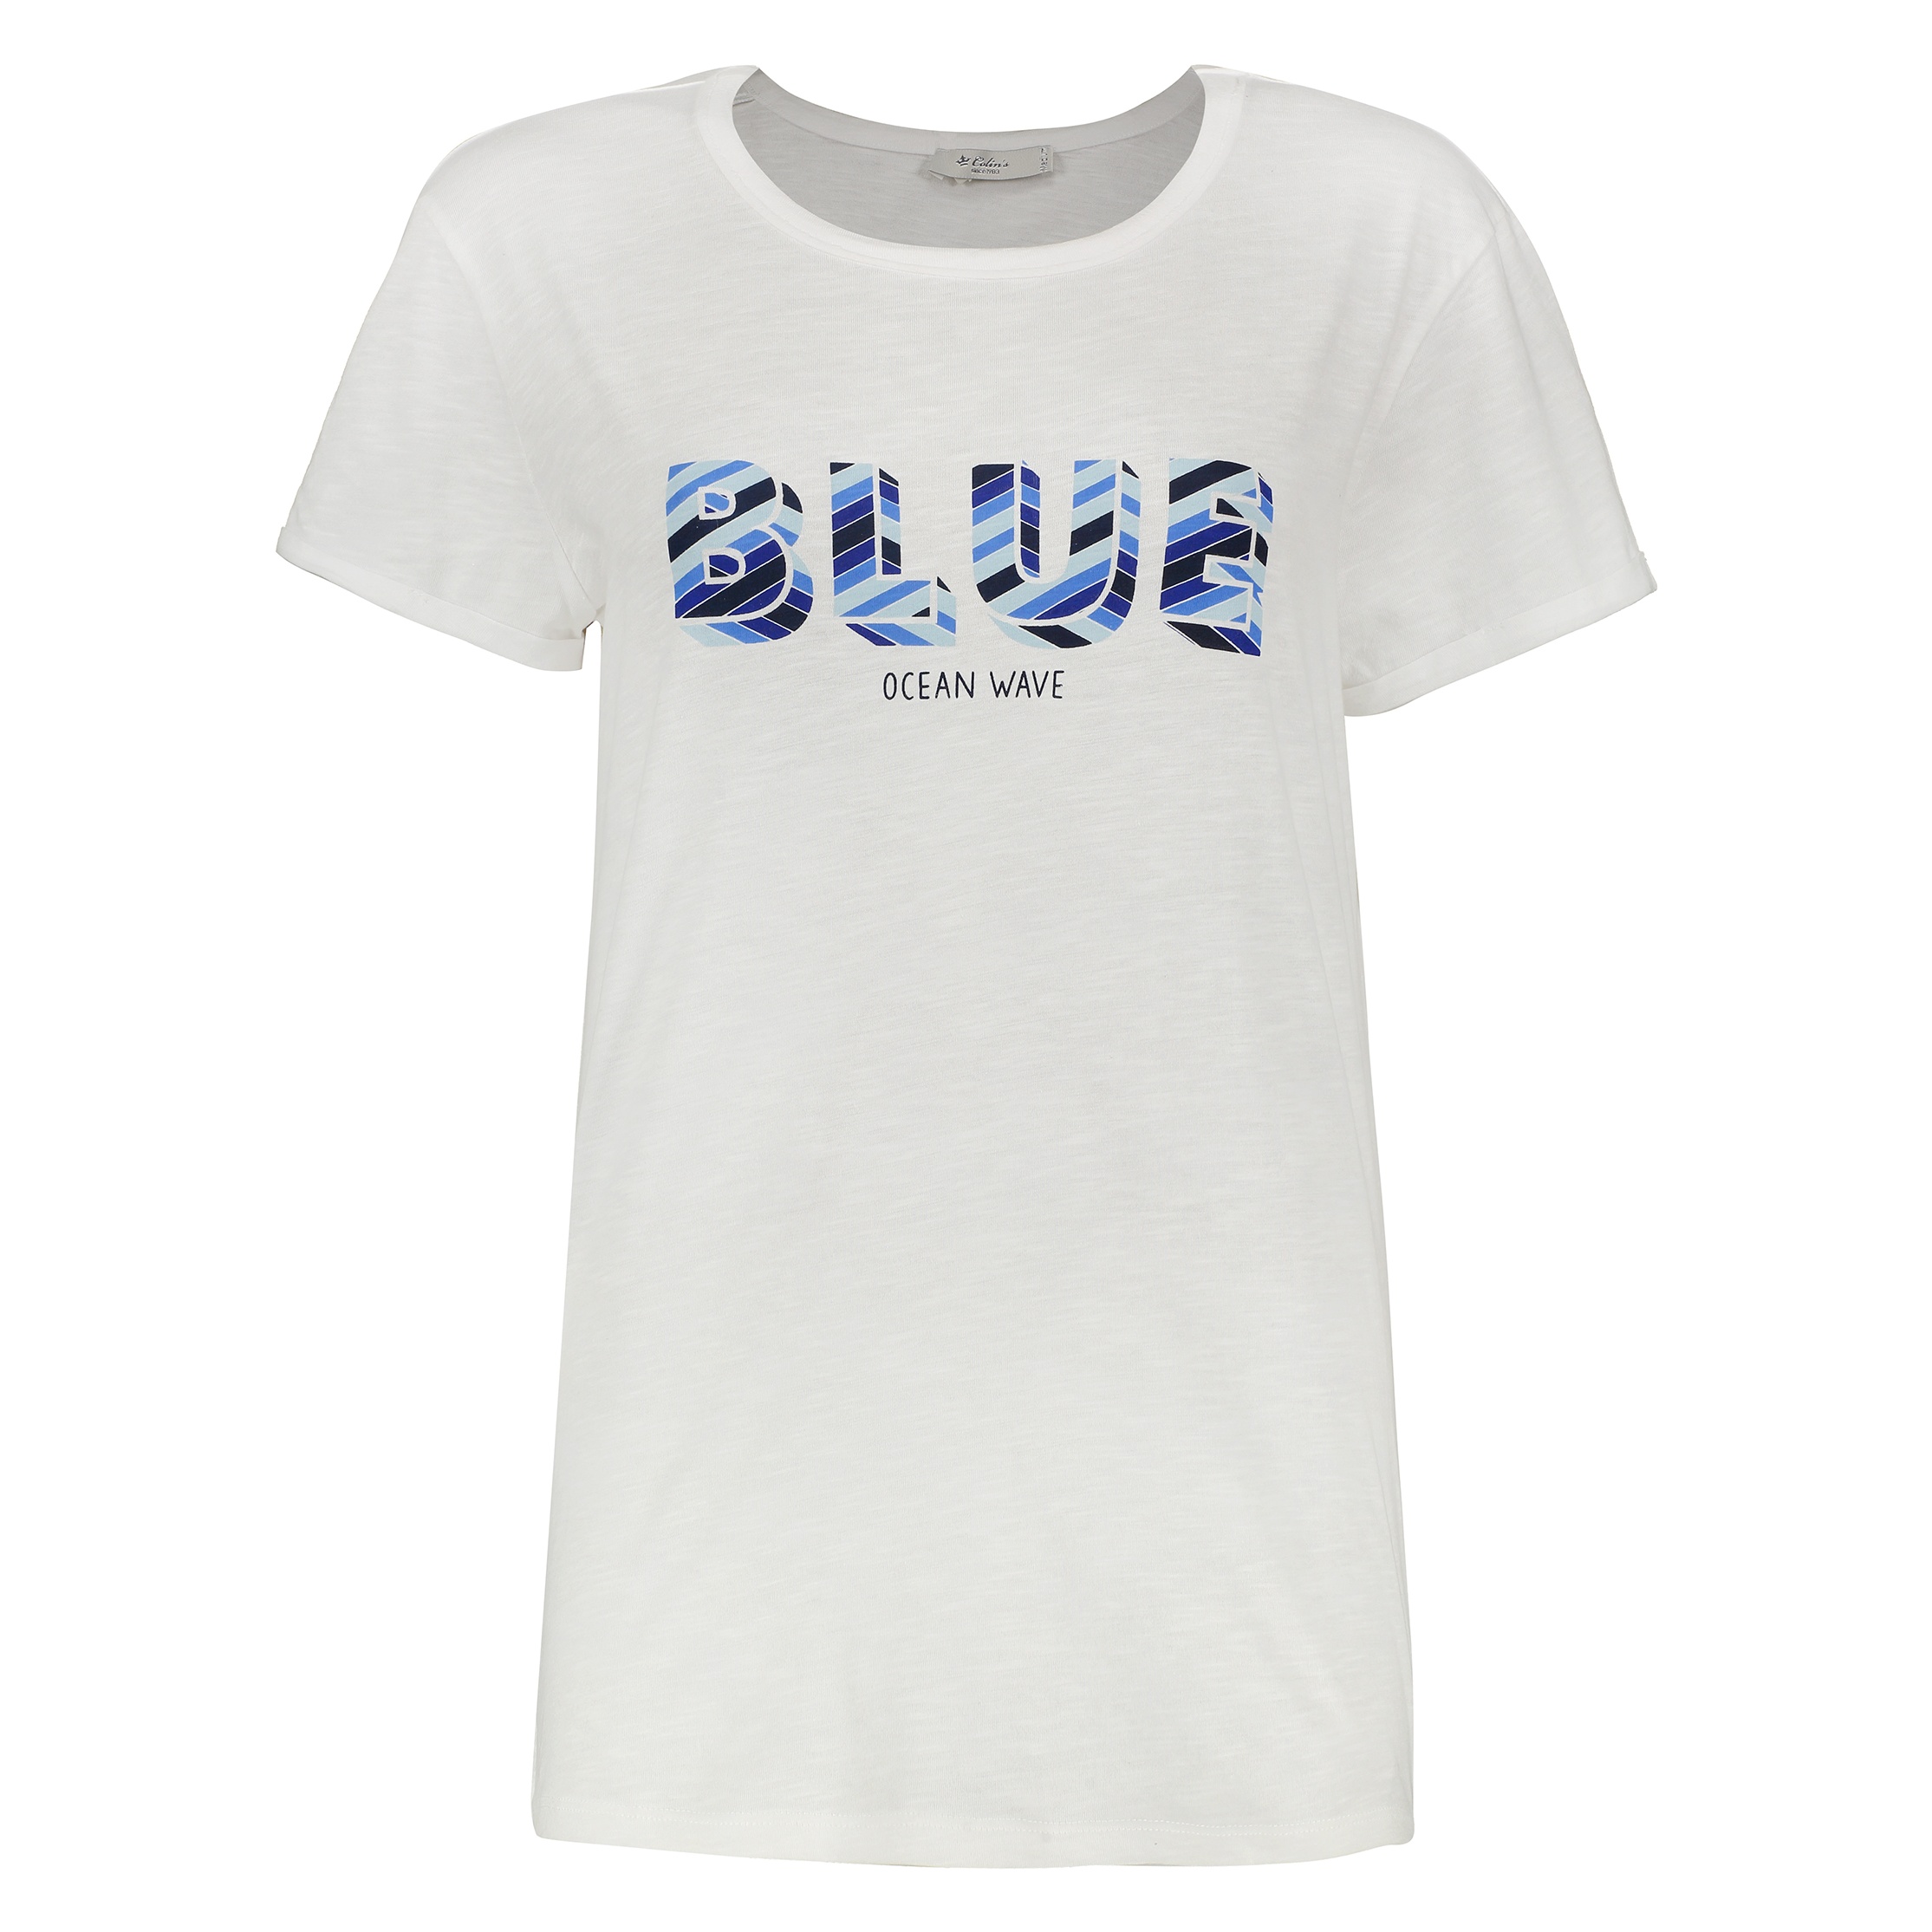 تی شرت زنانه کالینز مدل CL1032881-WHITE